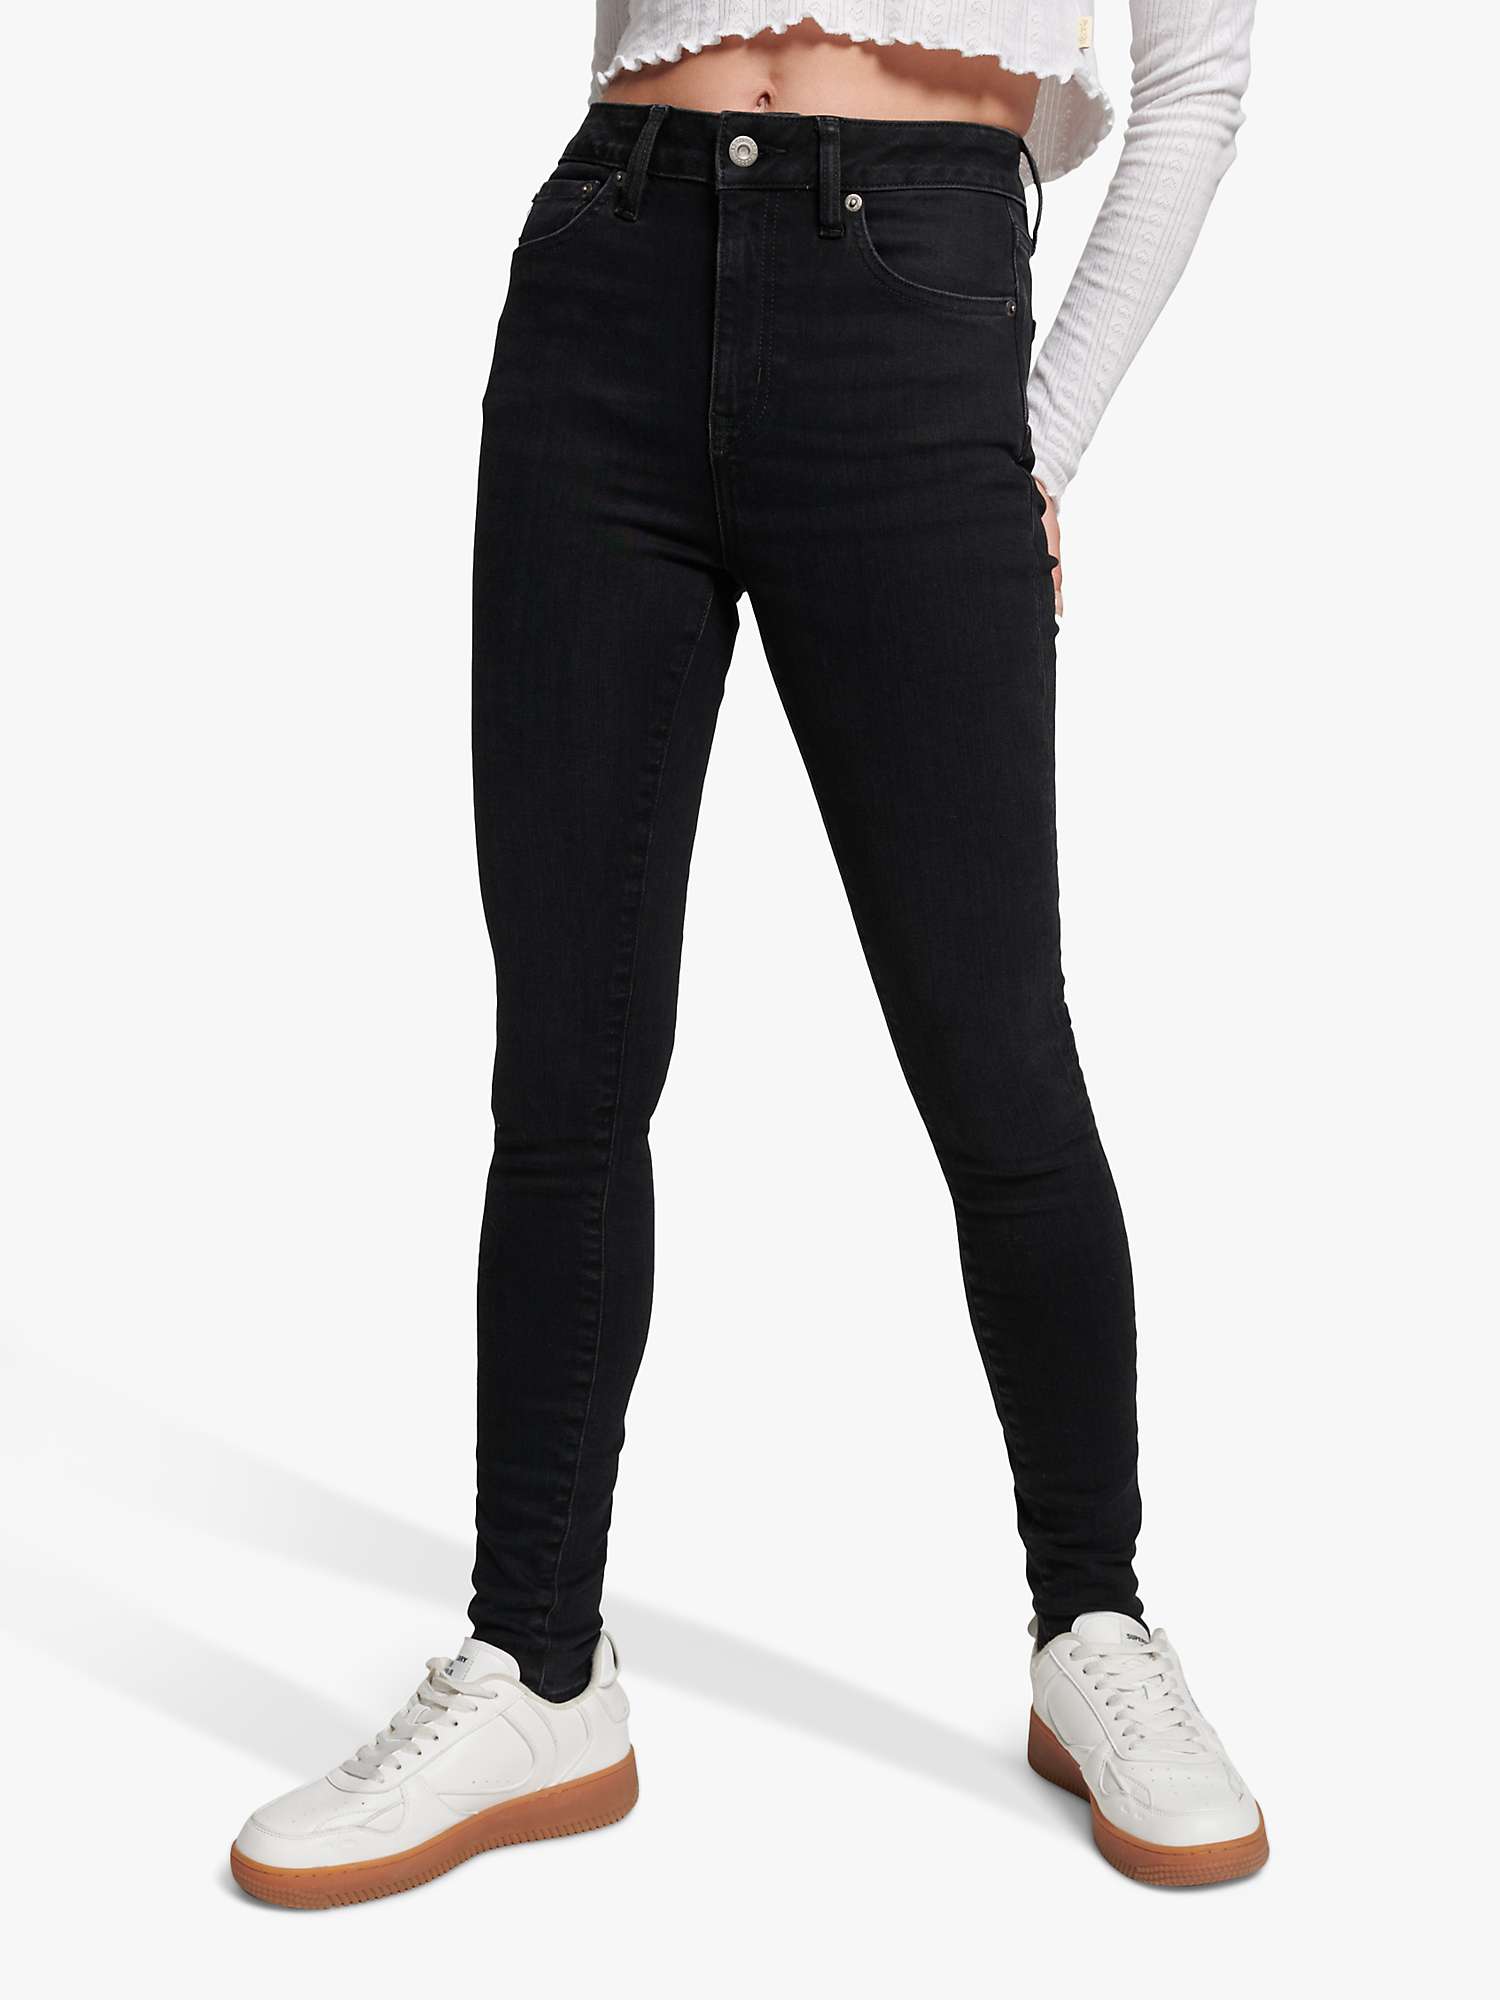 Buy Superdry Vintage High Rise Skinny Jeans Online at johnlewis.com